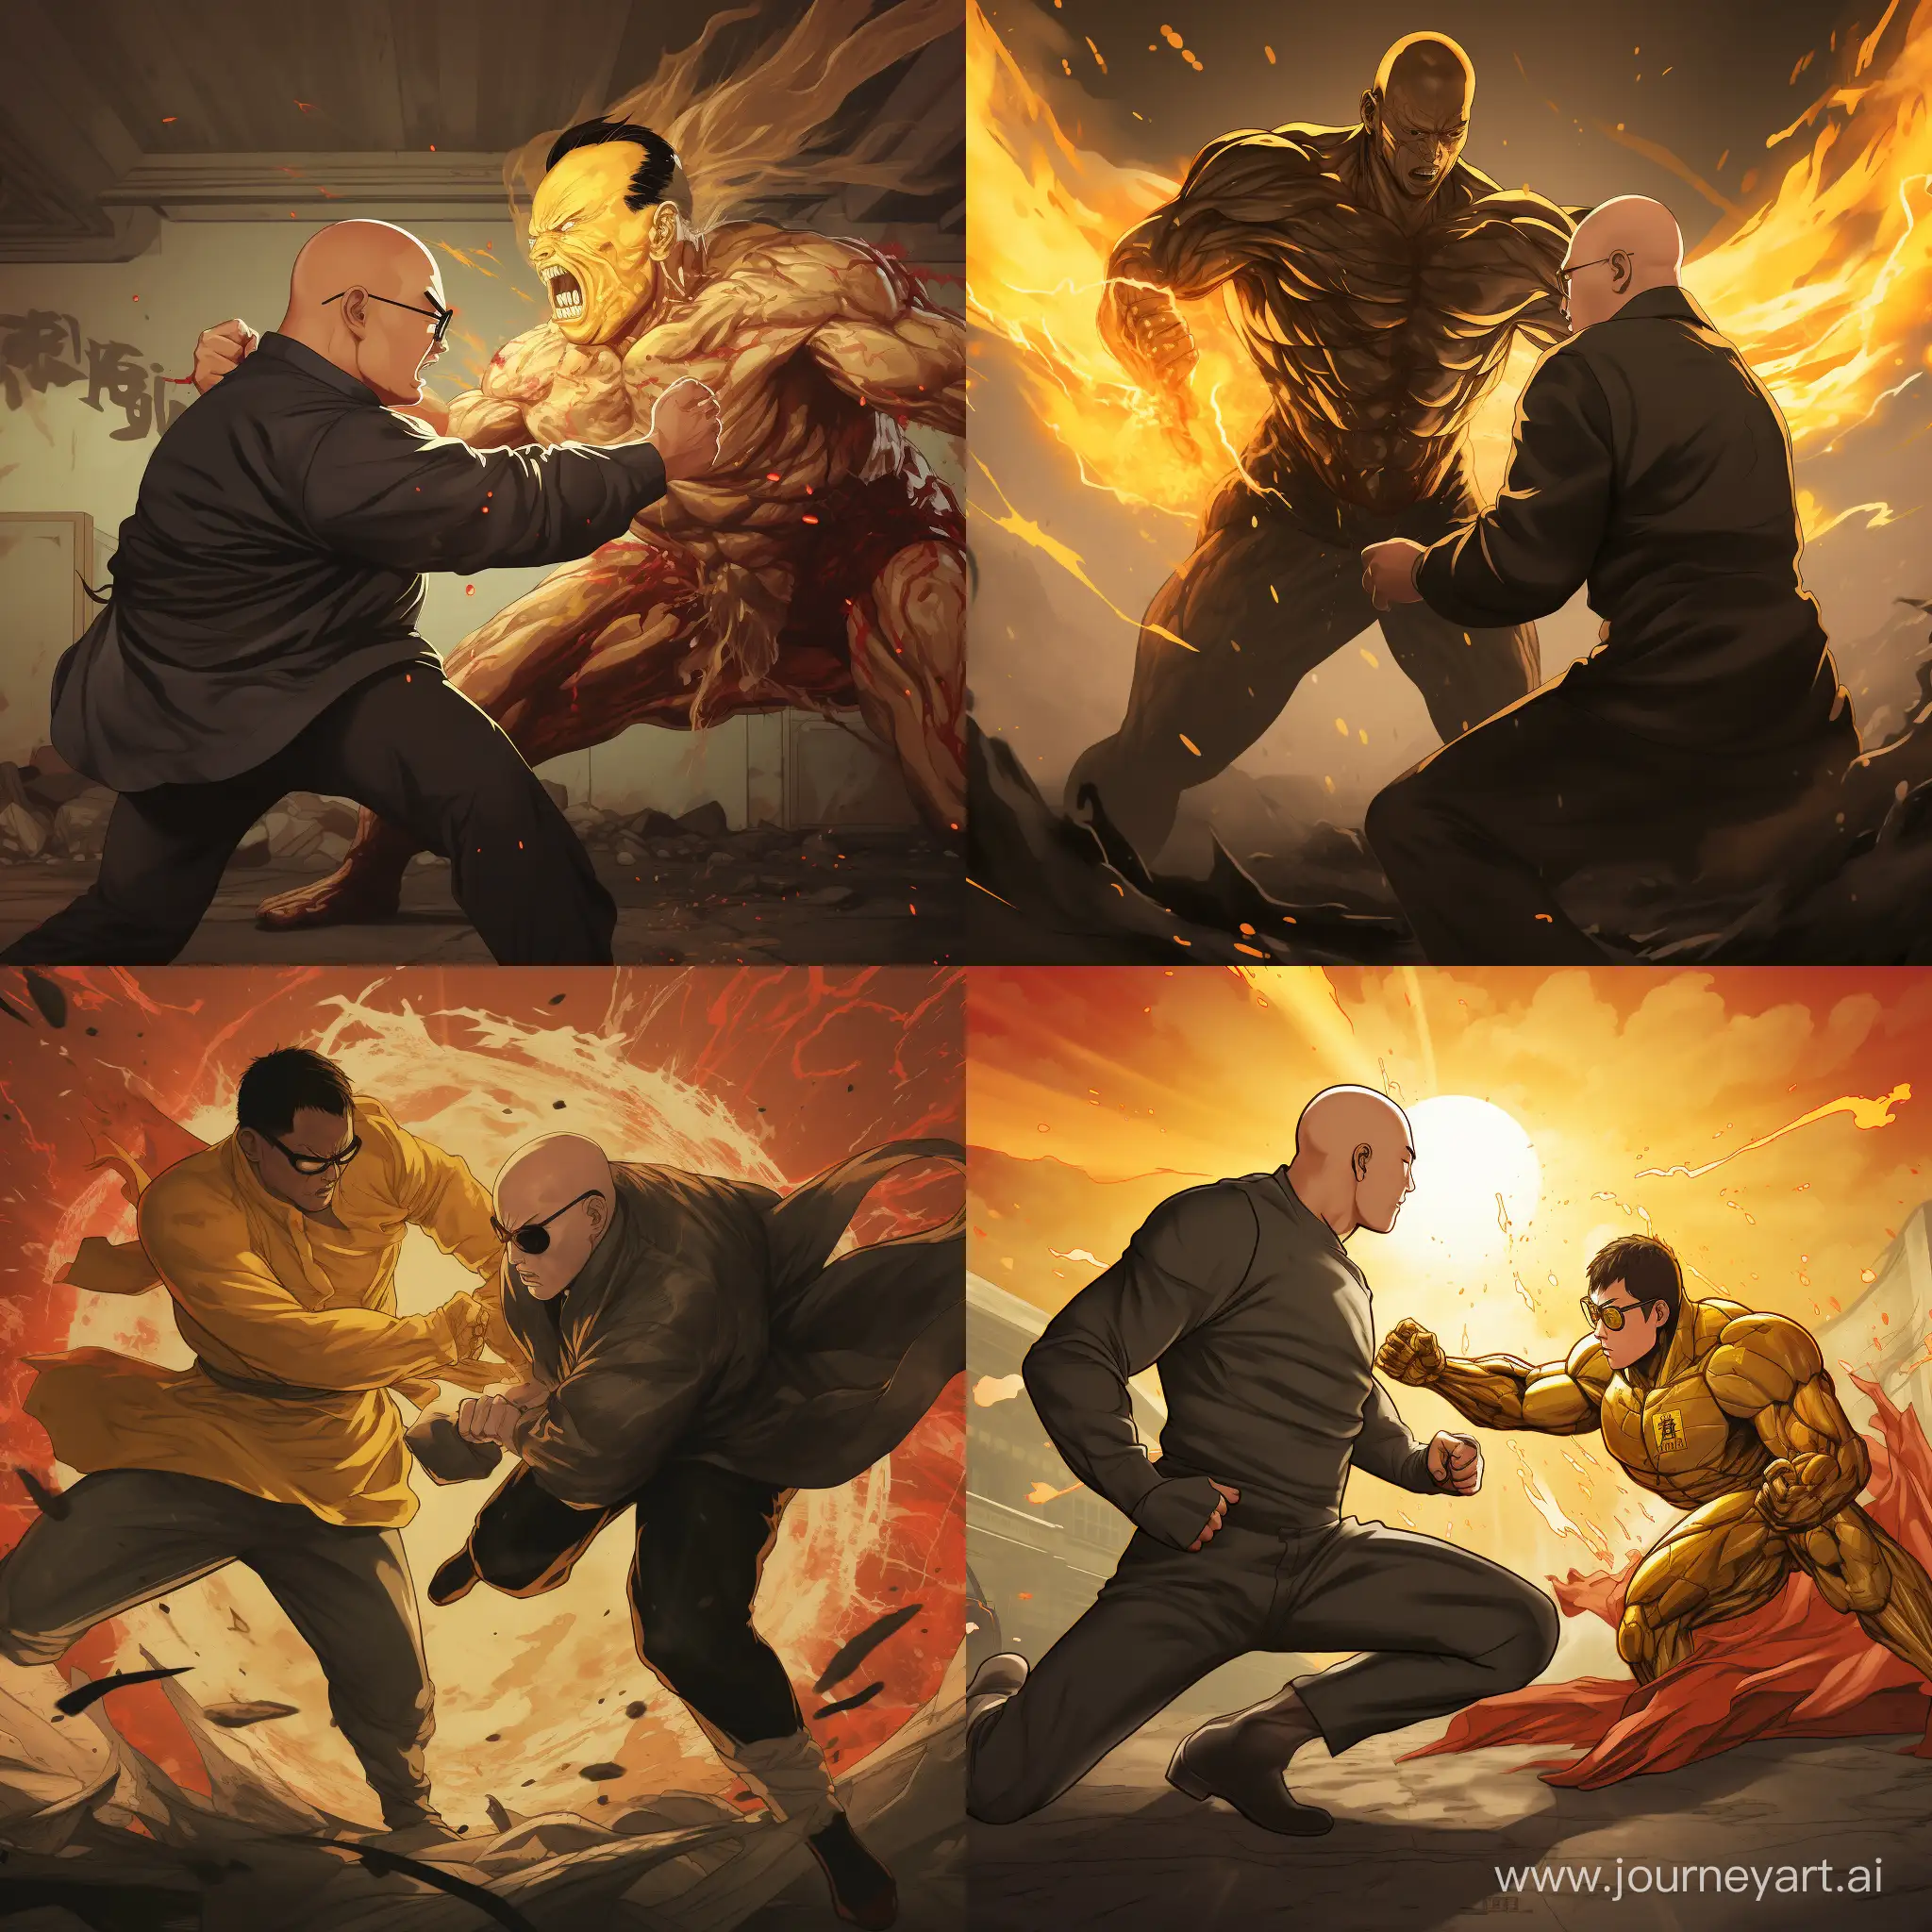 Epic-Showdown-One-Punch-Man-vs-Kim-Jong-Un